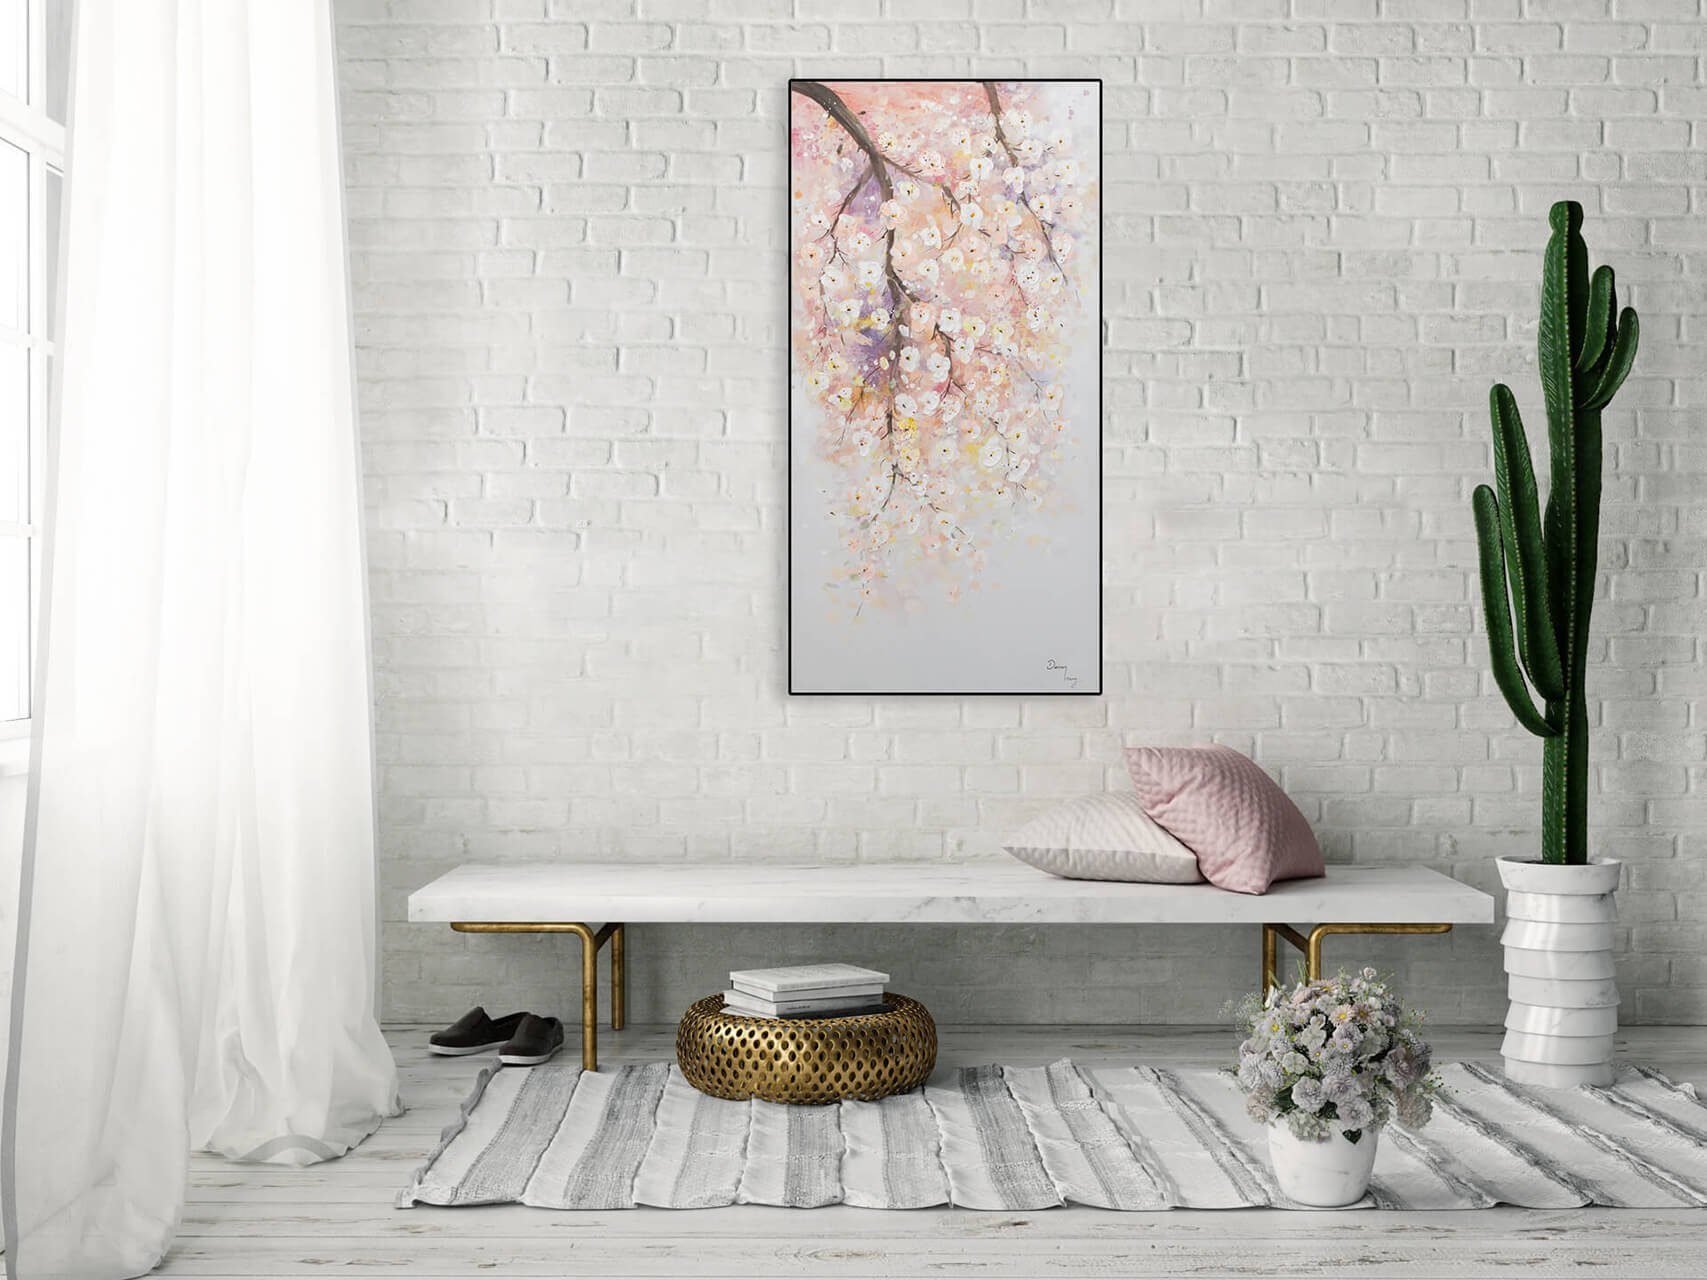 60x120 cm, Leinwandbild Wandbild Rosa Blütenregen Wohnzimmer Gemälde 100% HANDGEMALT KUNSTLOFT